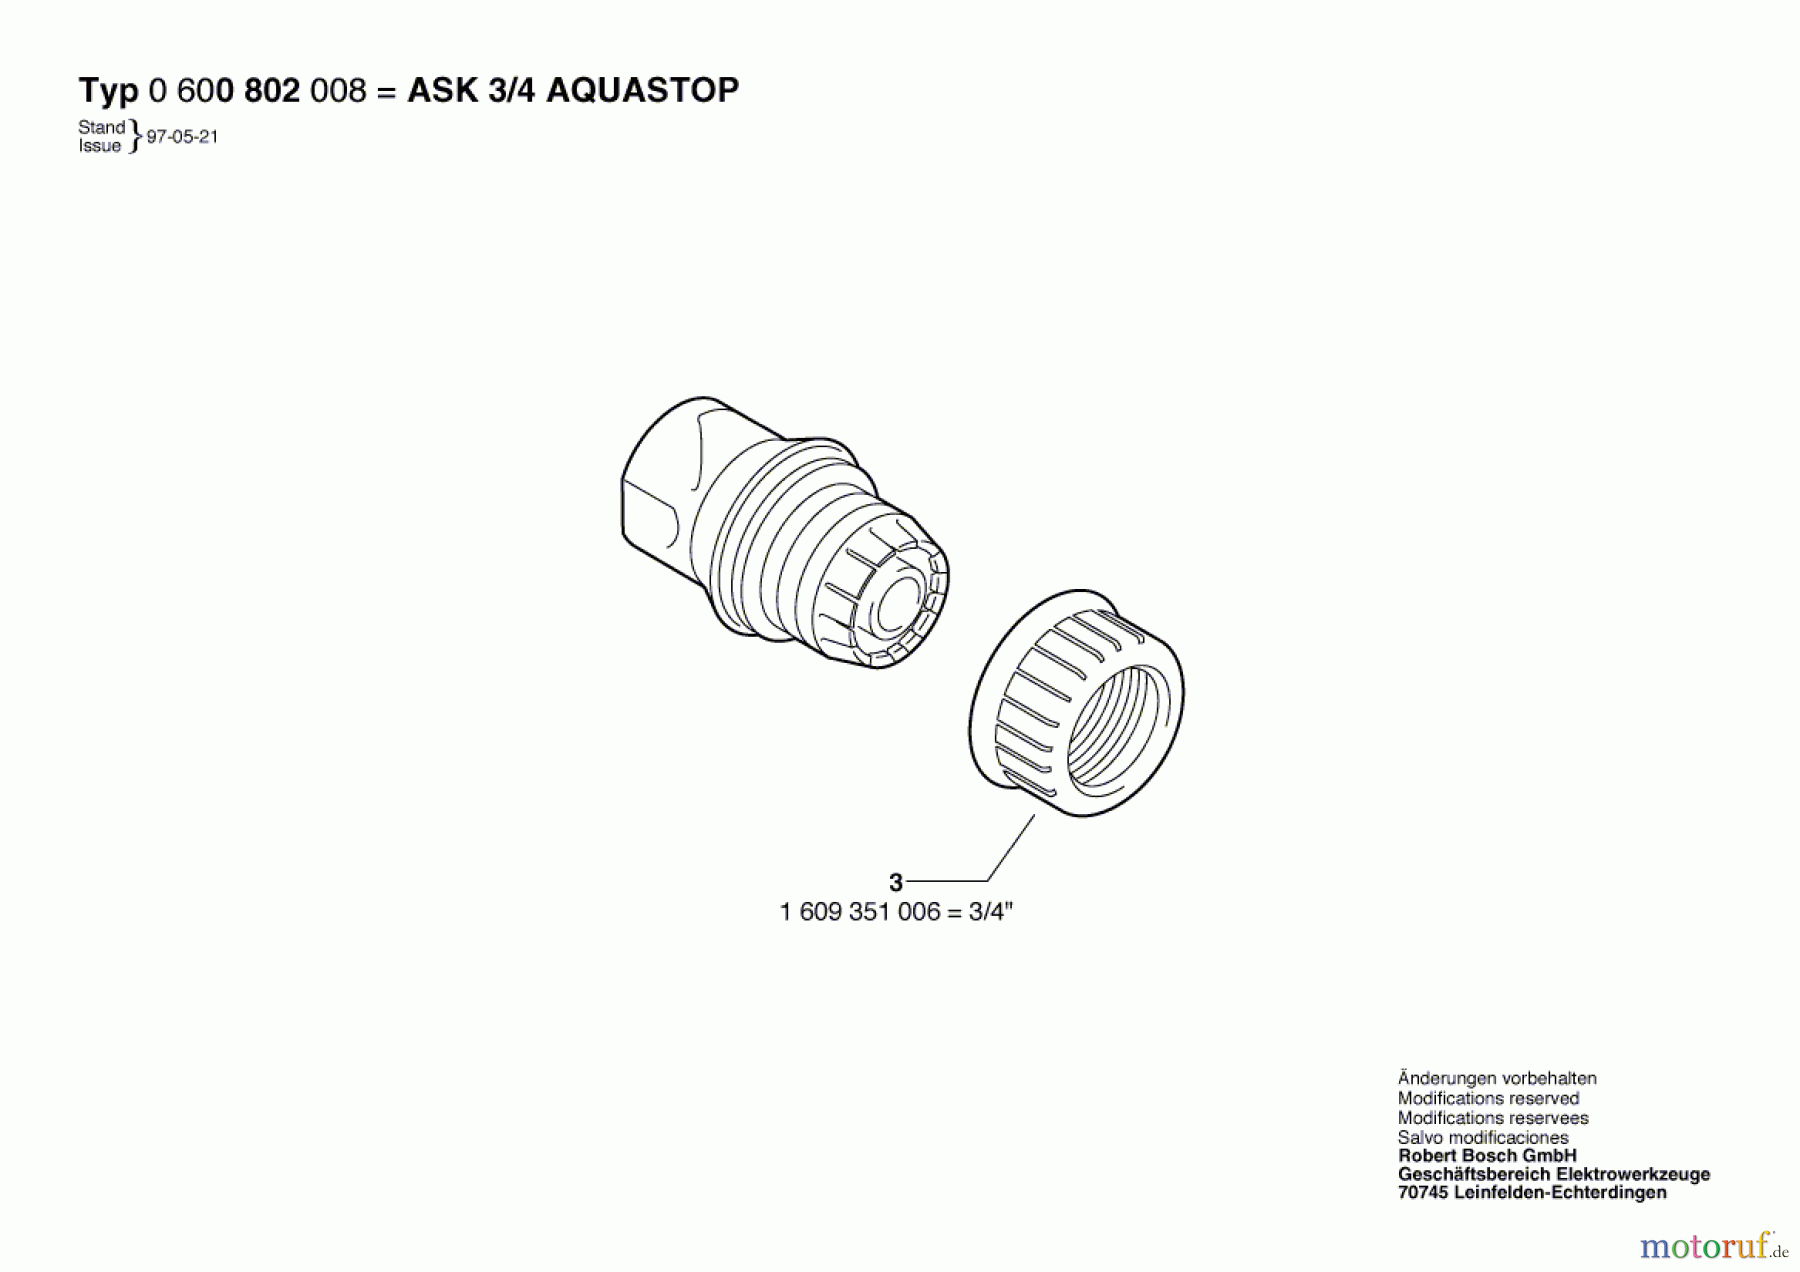  Bosch Wassertechnik Hahnanschlussstück ASK 3/4 AQUASTOP Seite 1